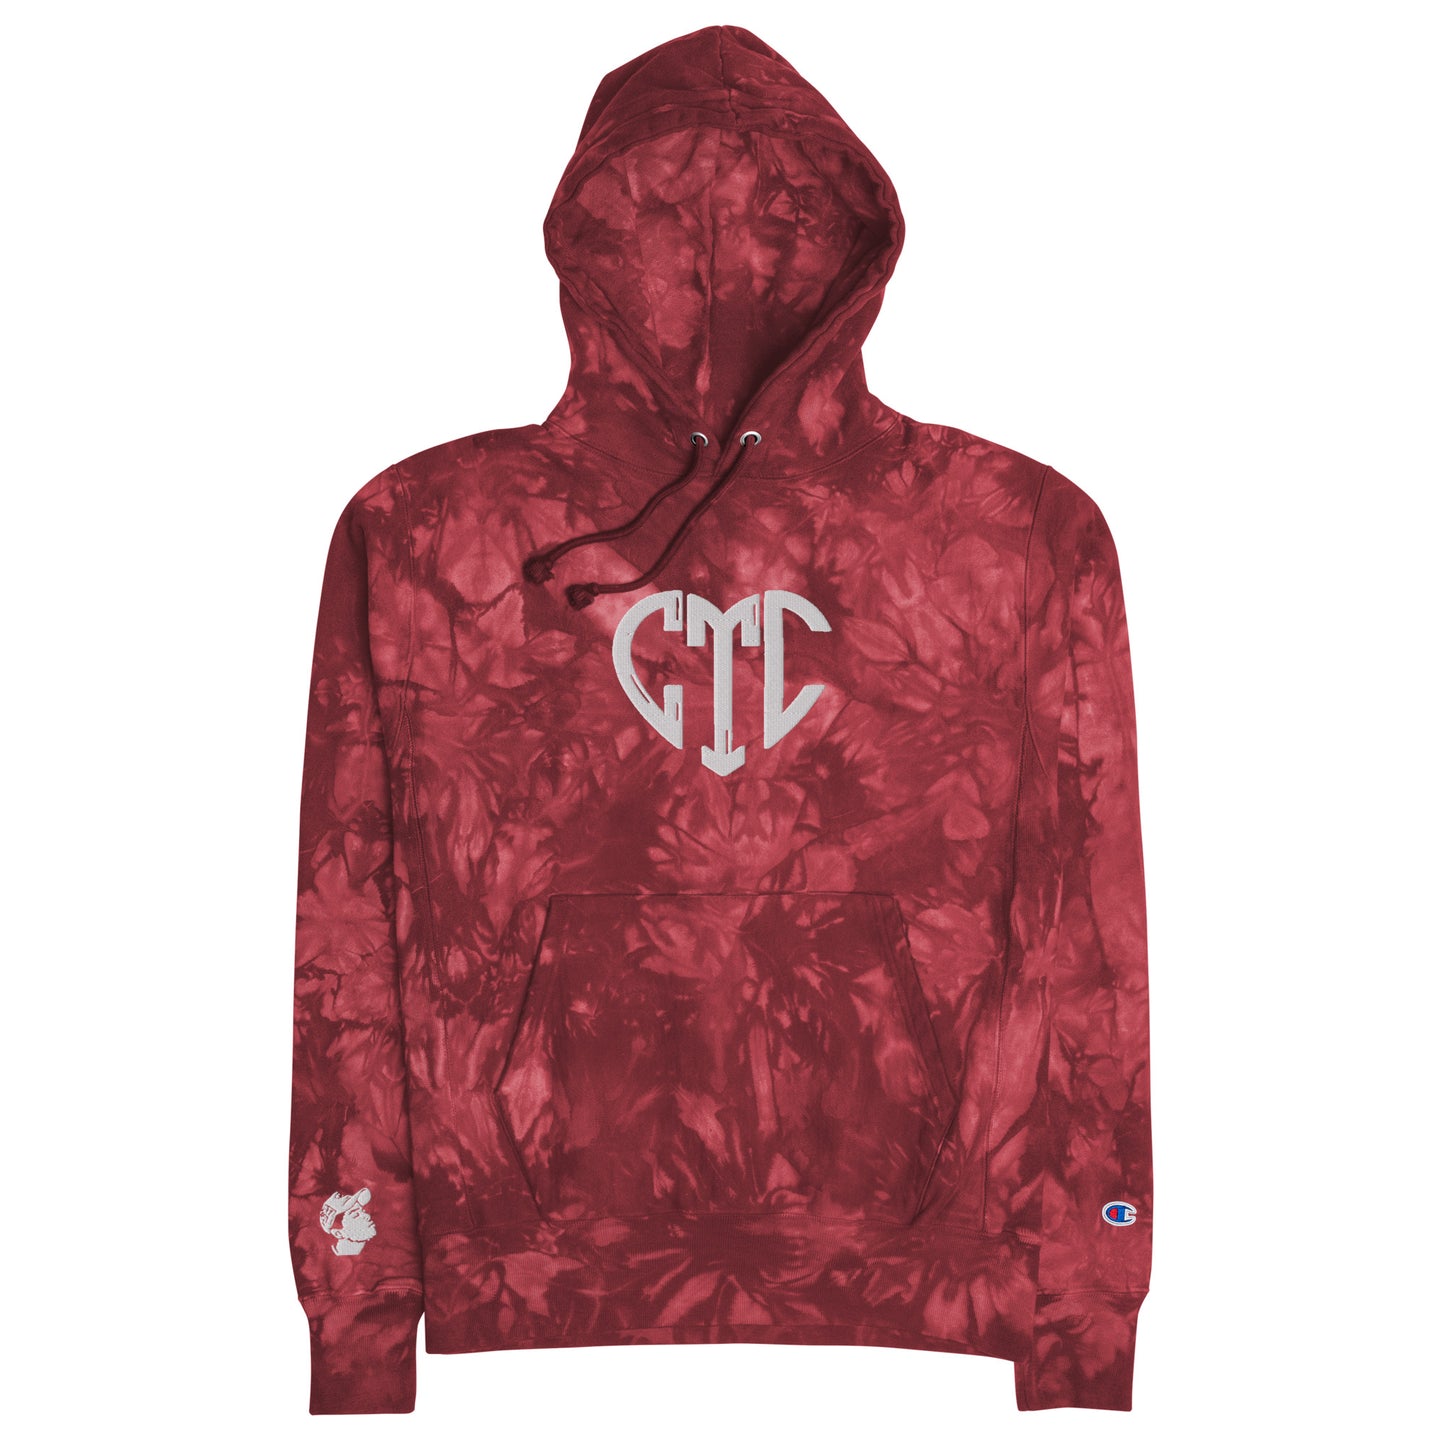 CtC Heart Champion tie-dye hoodie